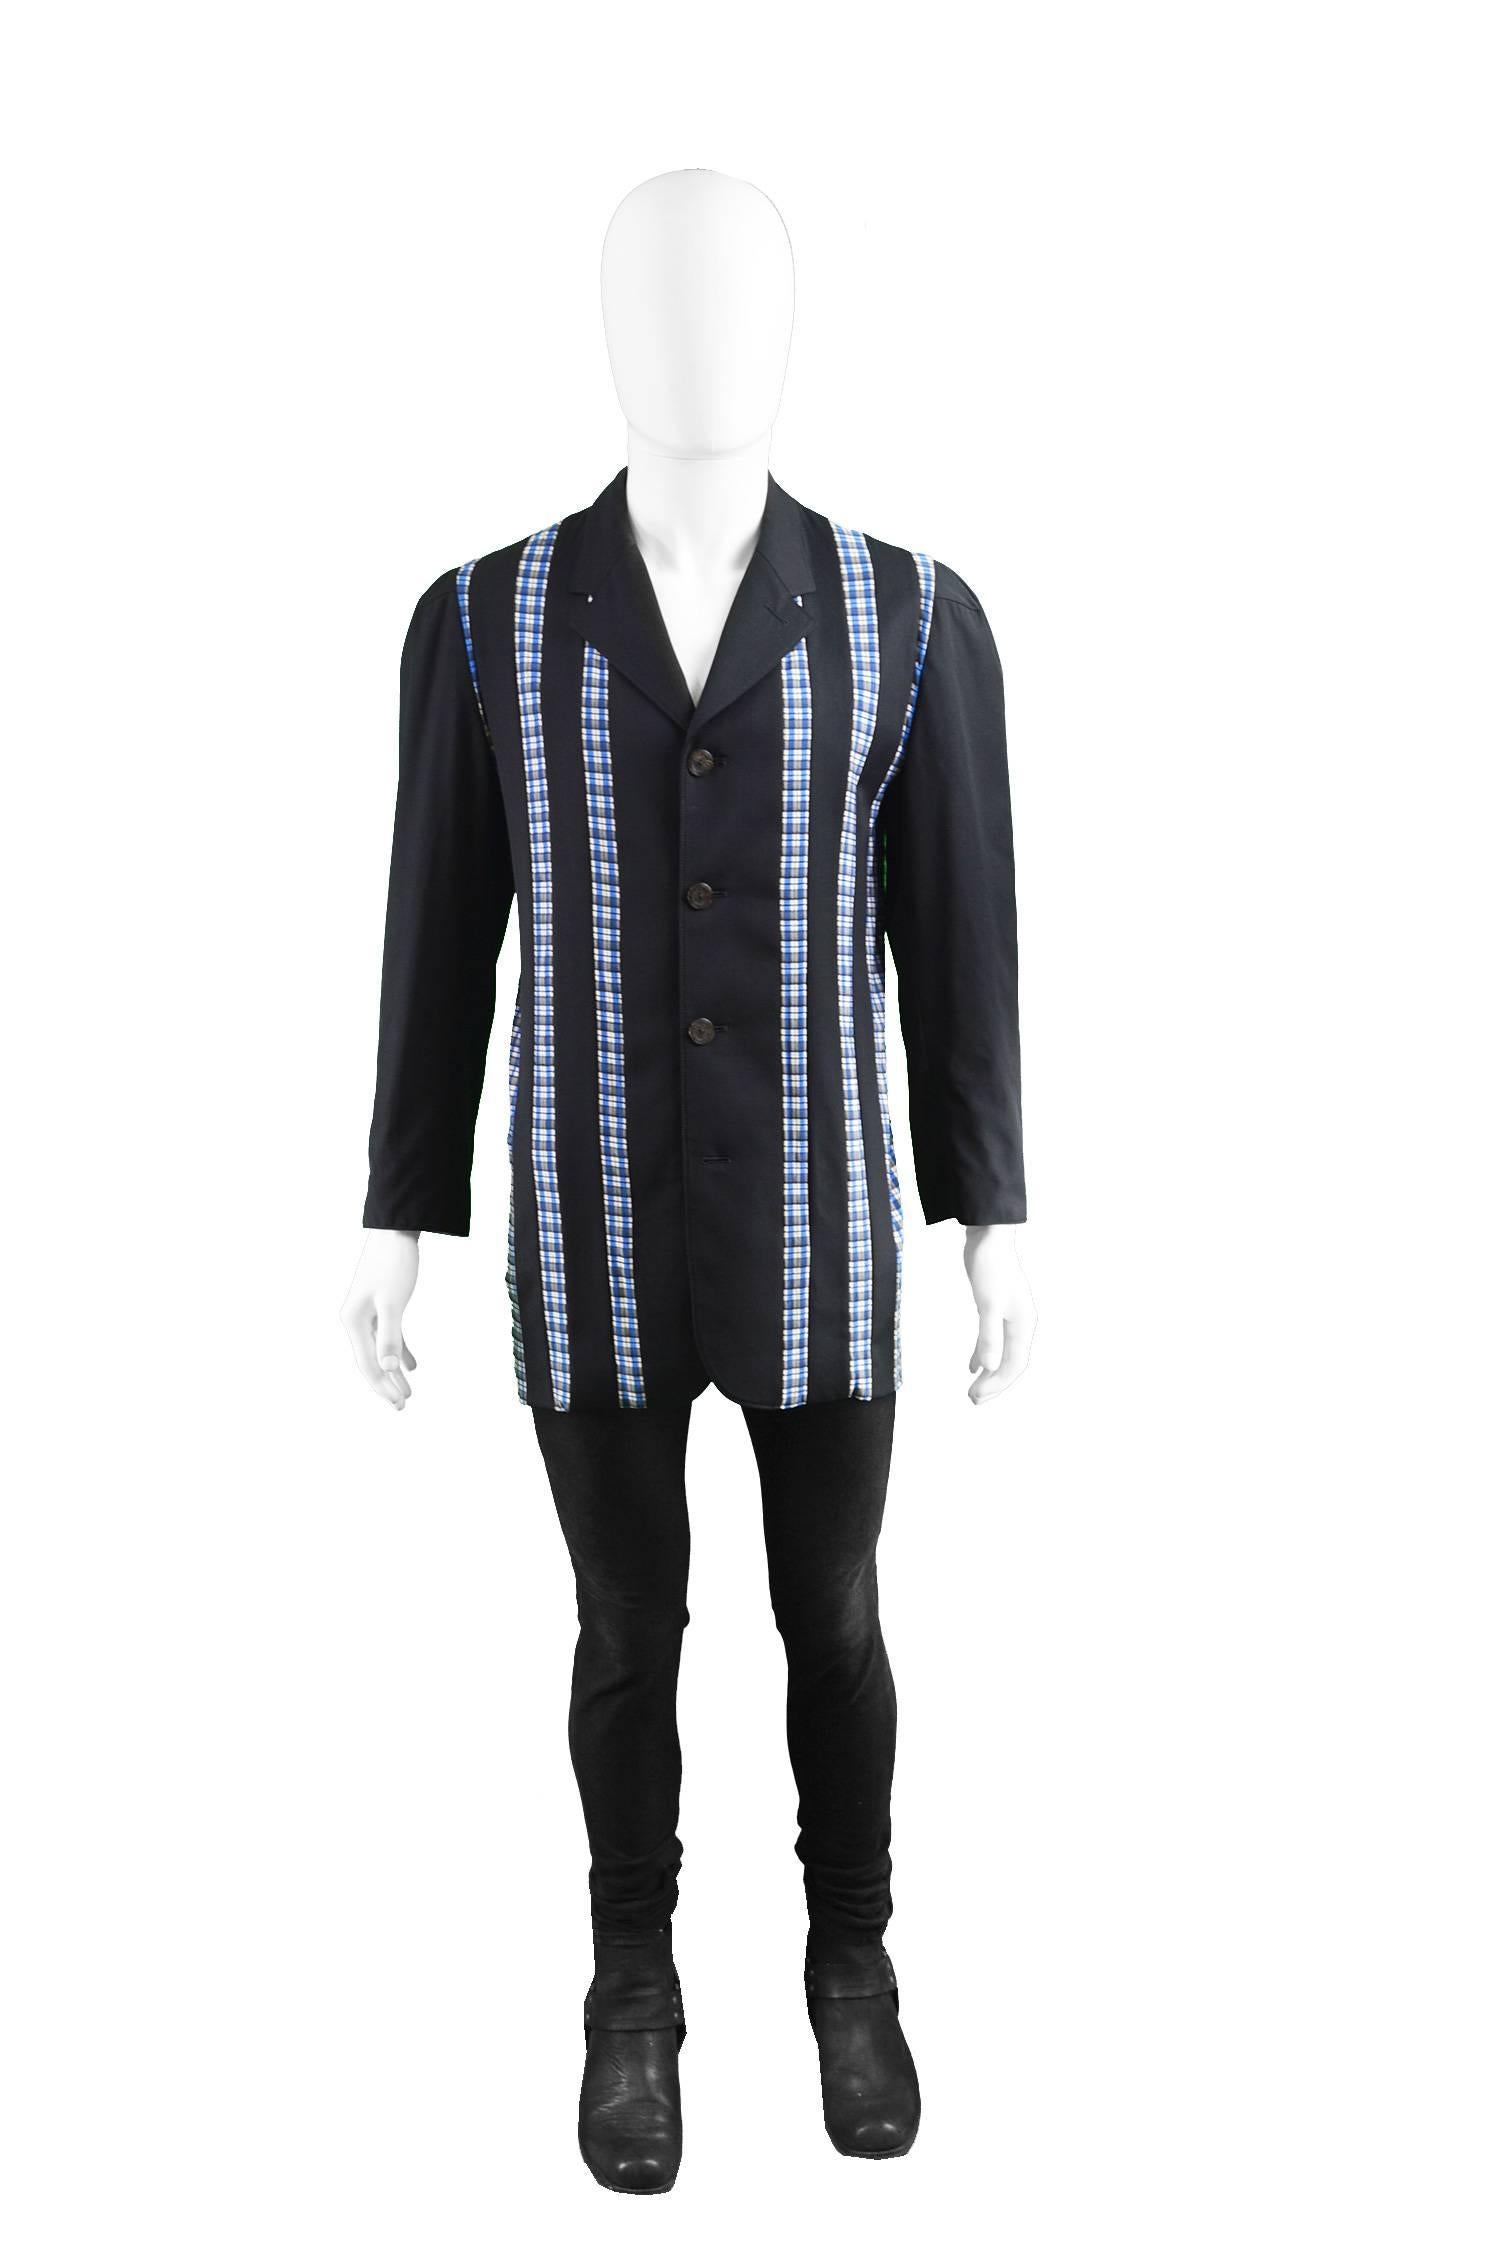 Jean Paul Gaultier Men's Light Wool Blazer with Stretch Tartan Panels, 1980s

Size: Marked I 50 / GB 40
Chest - 40” / 101cm
Waist - 38” / 96cm
Length (Shoulder to Hem) - 31” / 79cm
Shoulder to Shoulder - 17” / 43cm
Sleeve Pit to Cuff - 16” /